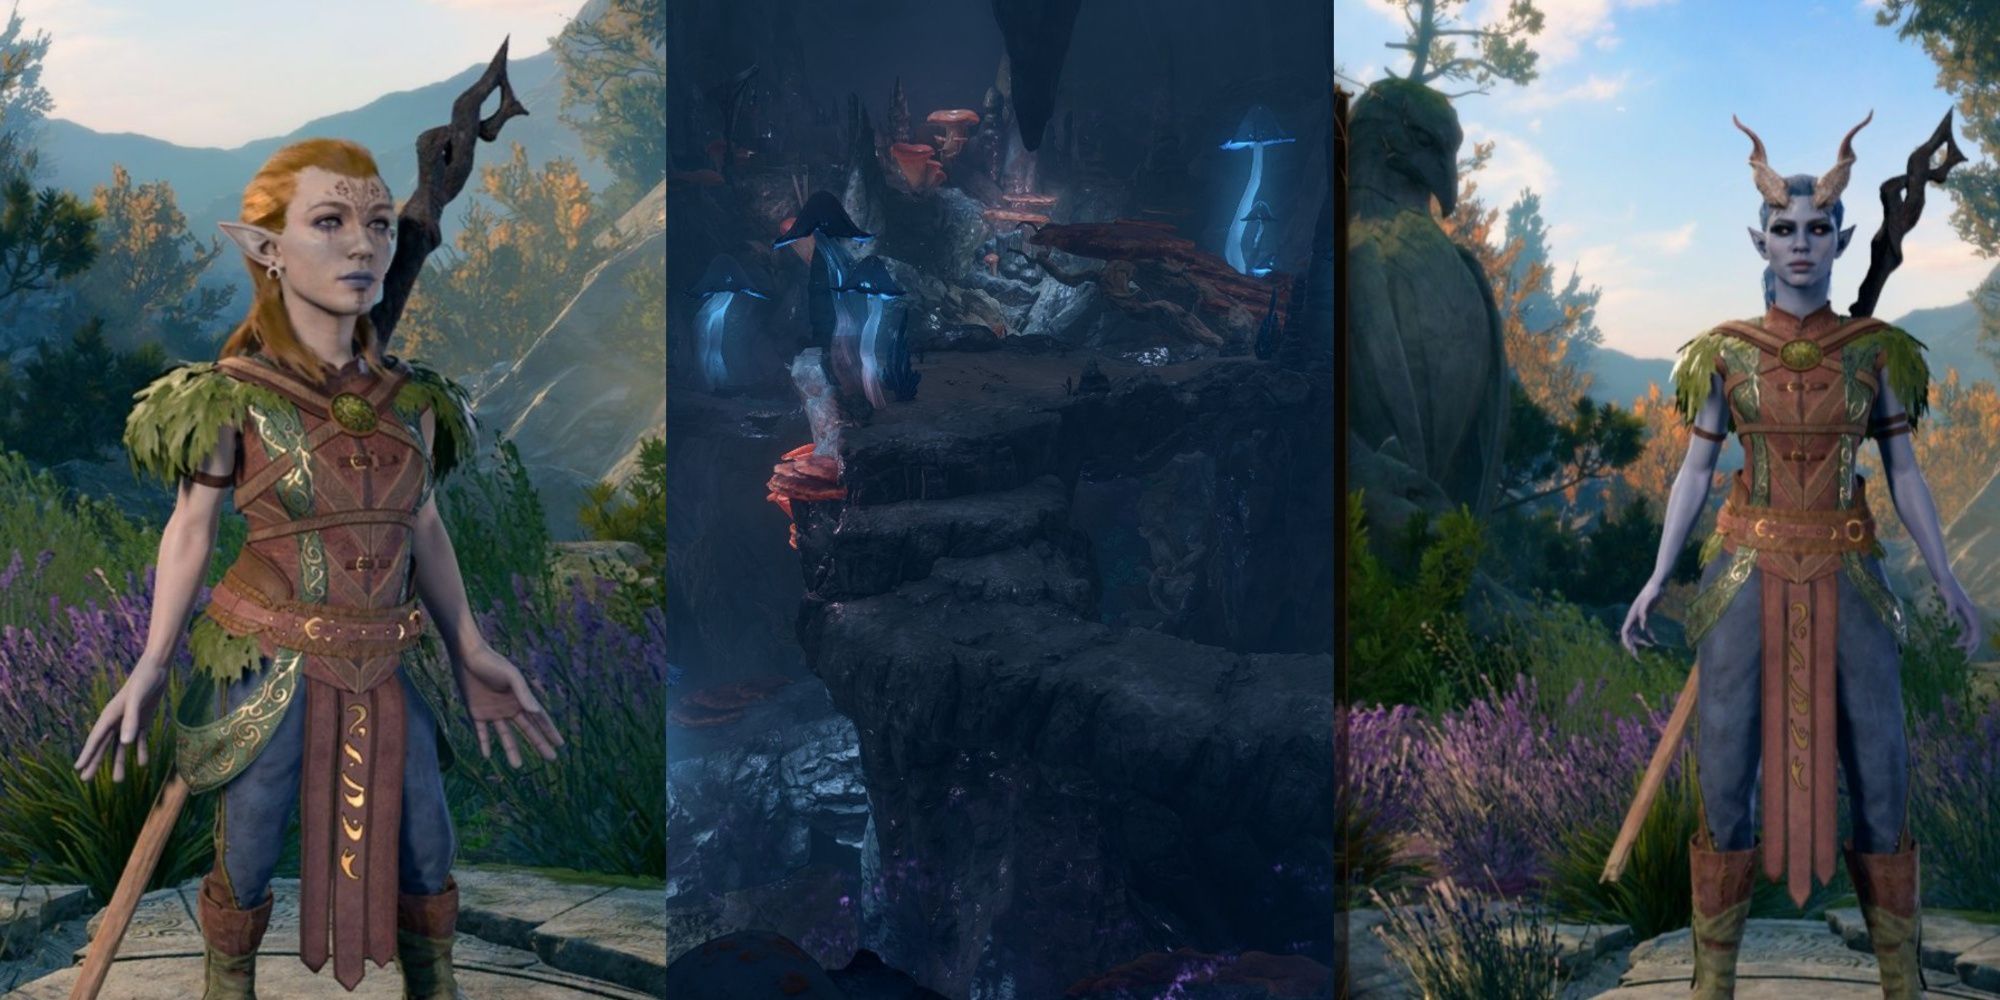 Split images of a Druid, the Underdark, and a Tiefling Druid in Baldur’s Gate 3.